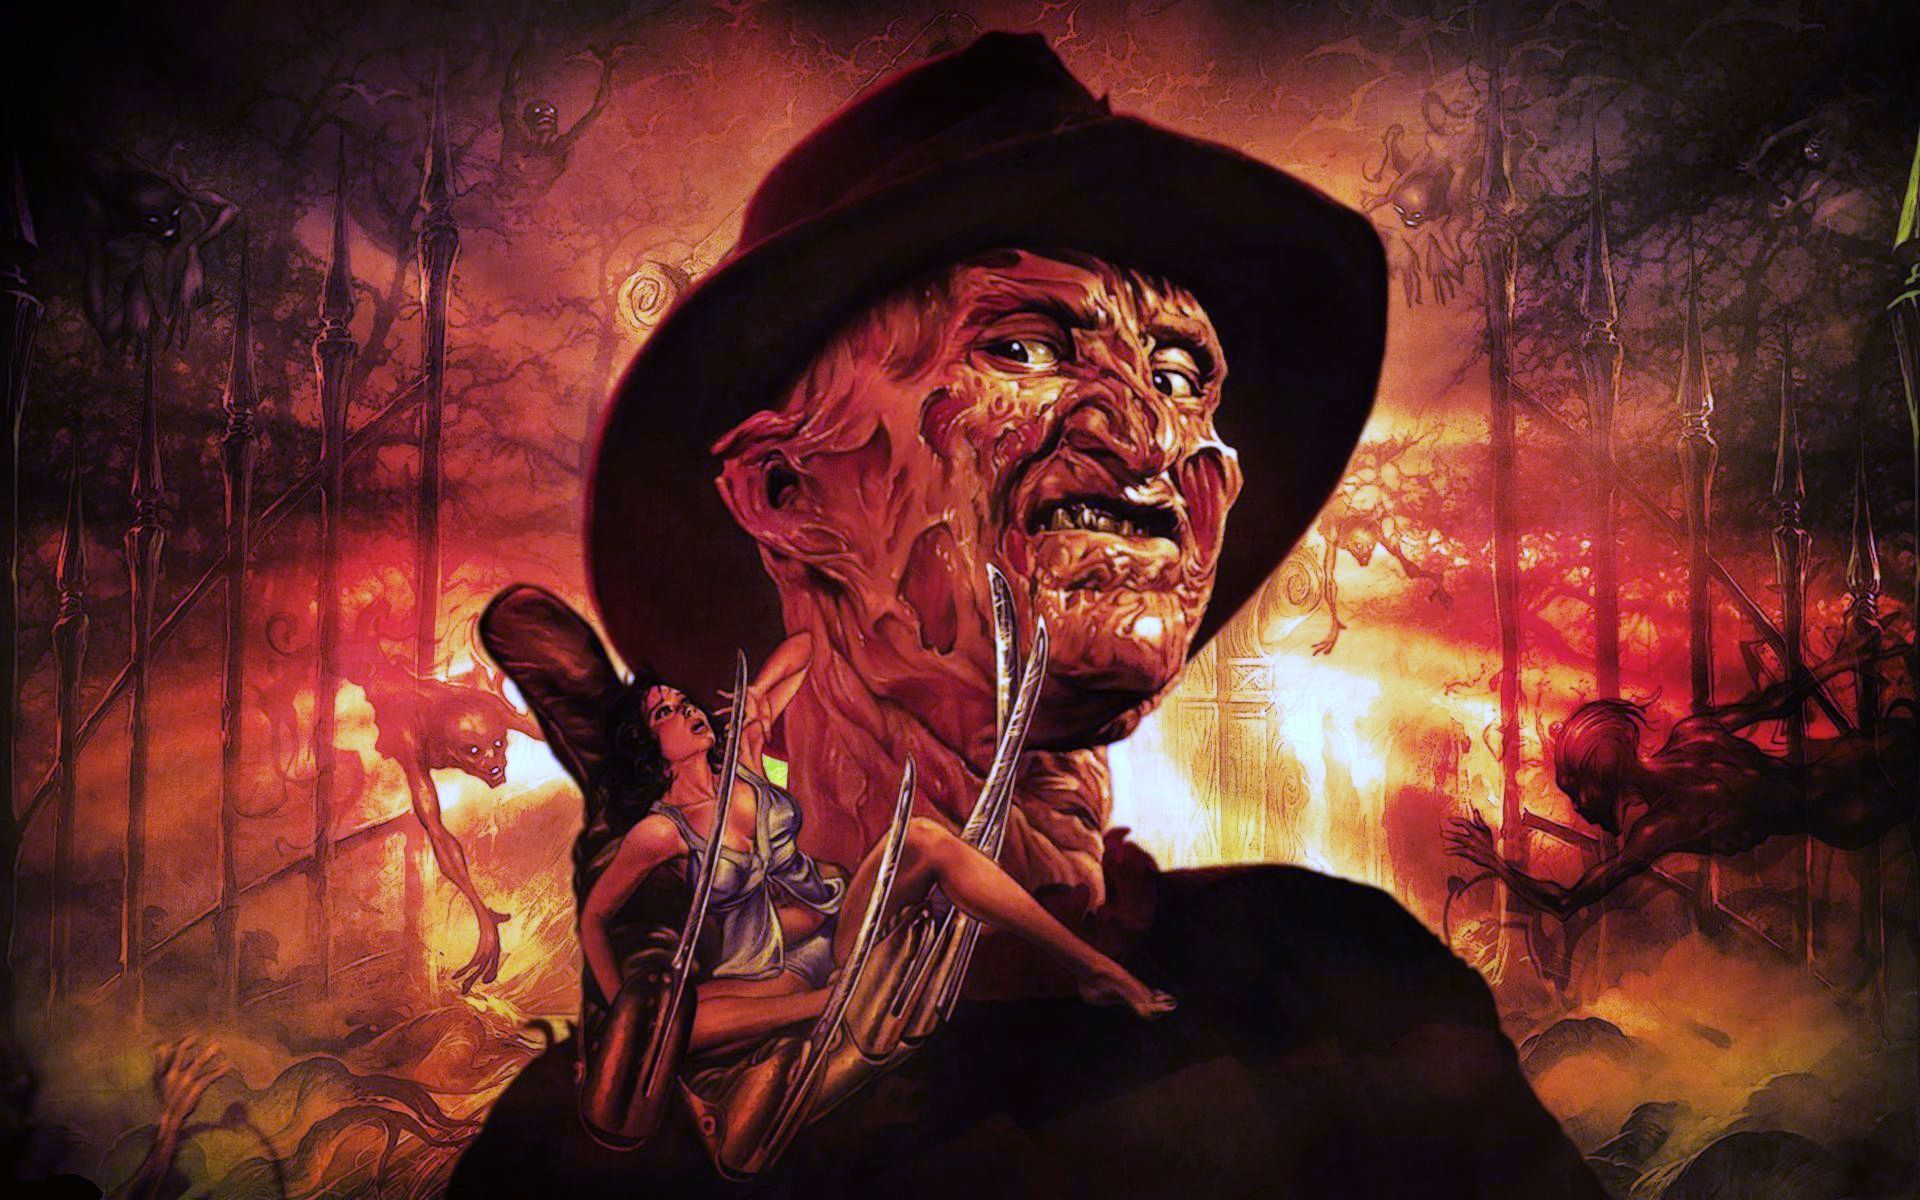 A Nightmare On Elm Street 2: Freddy'S Revenge Wallpapers